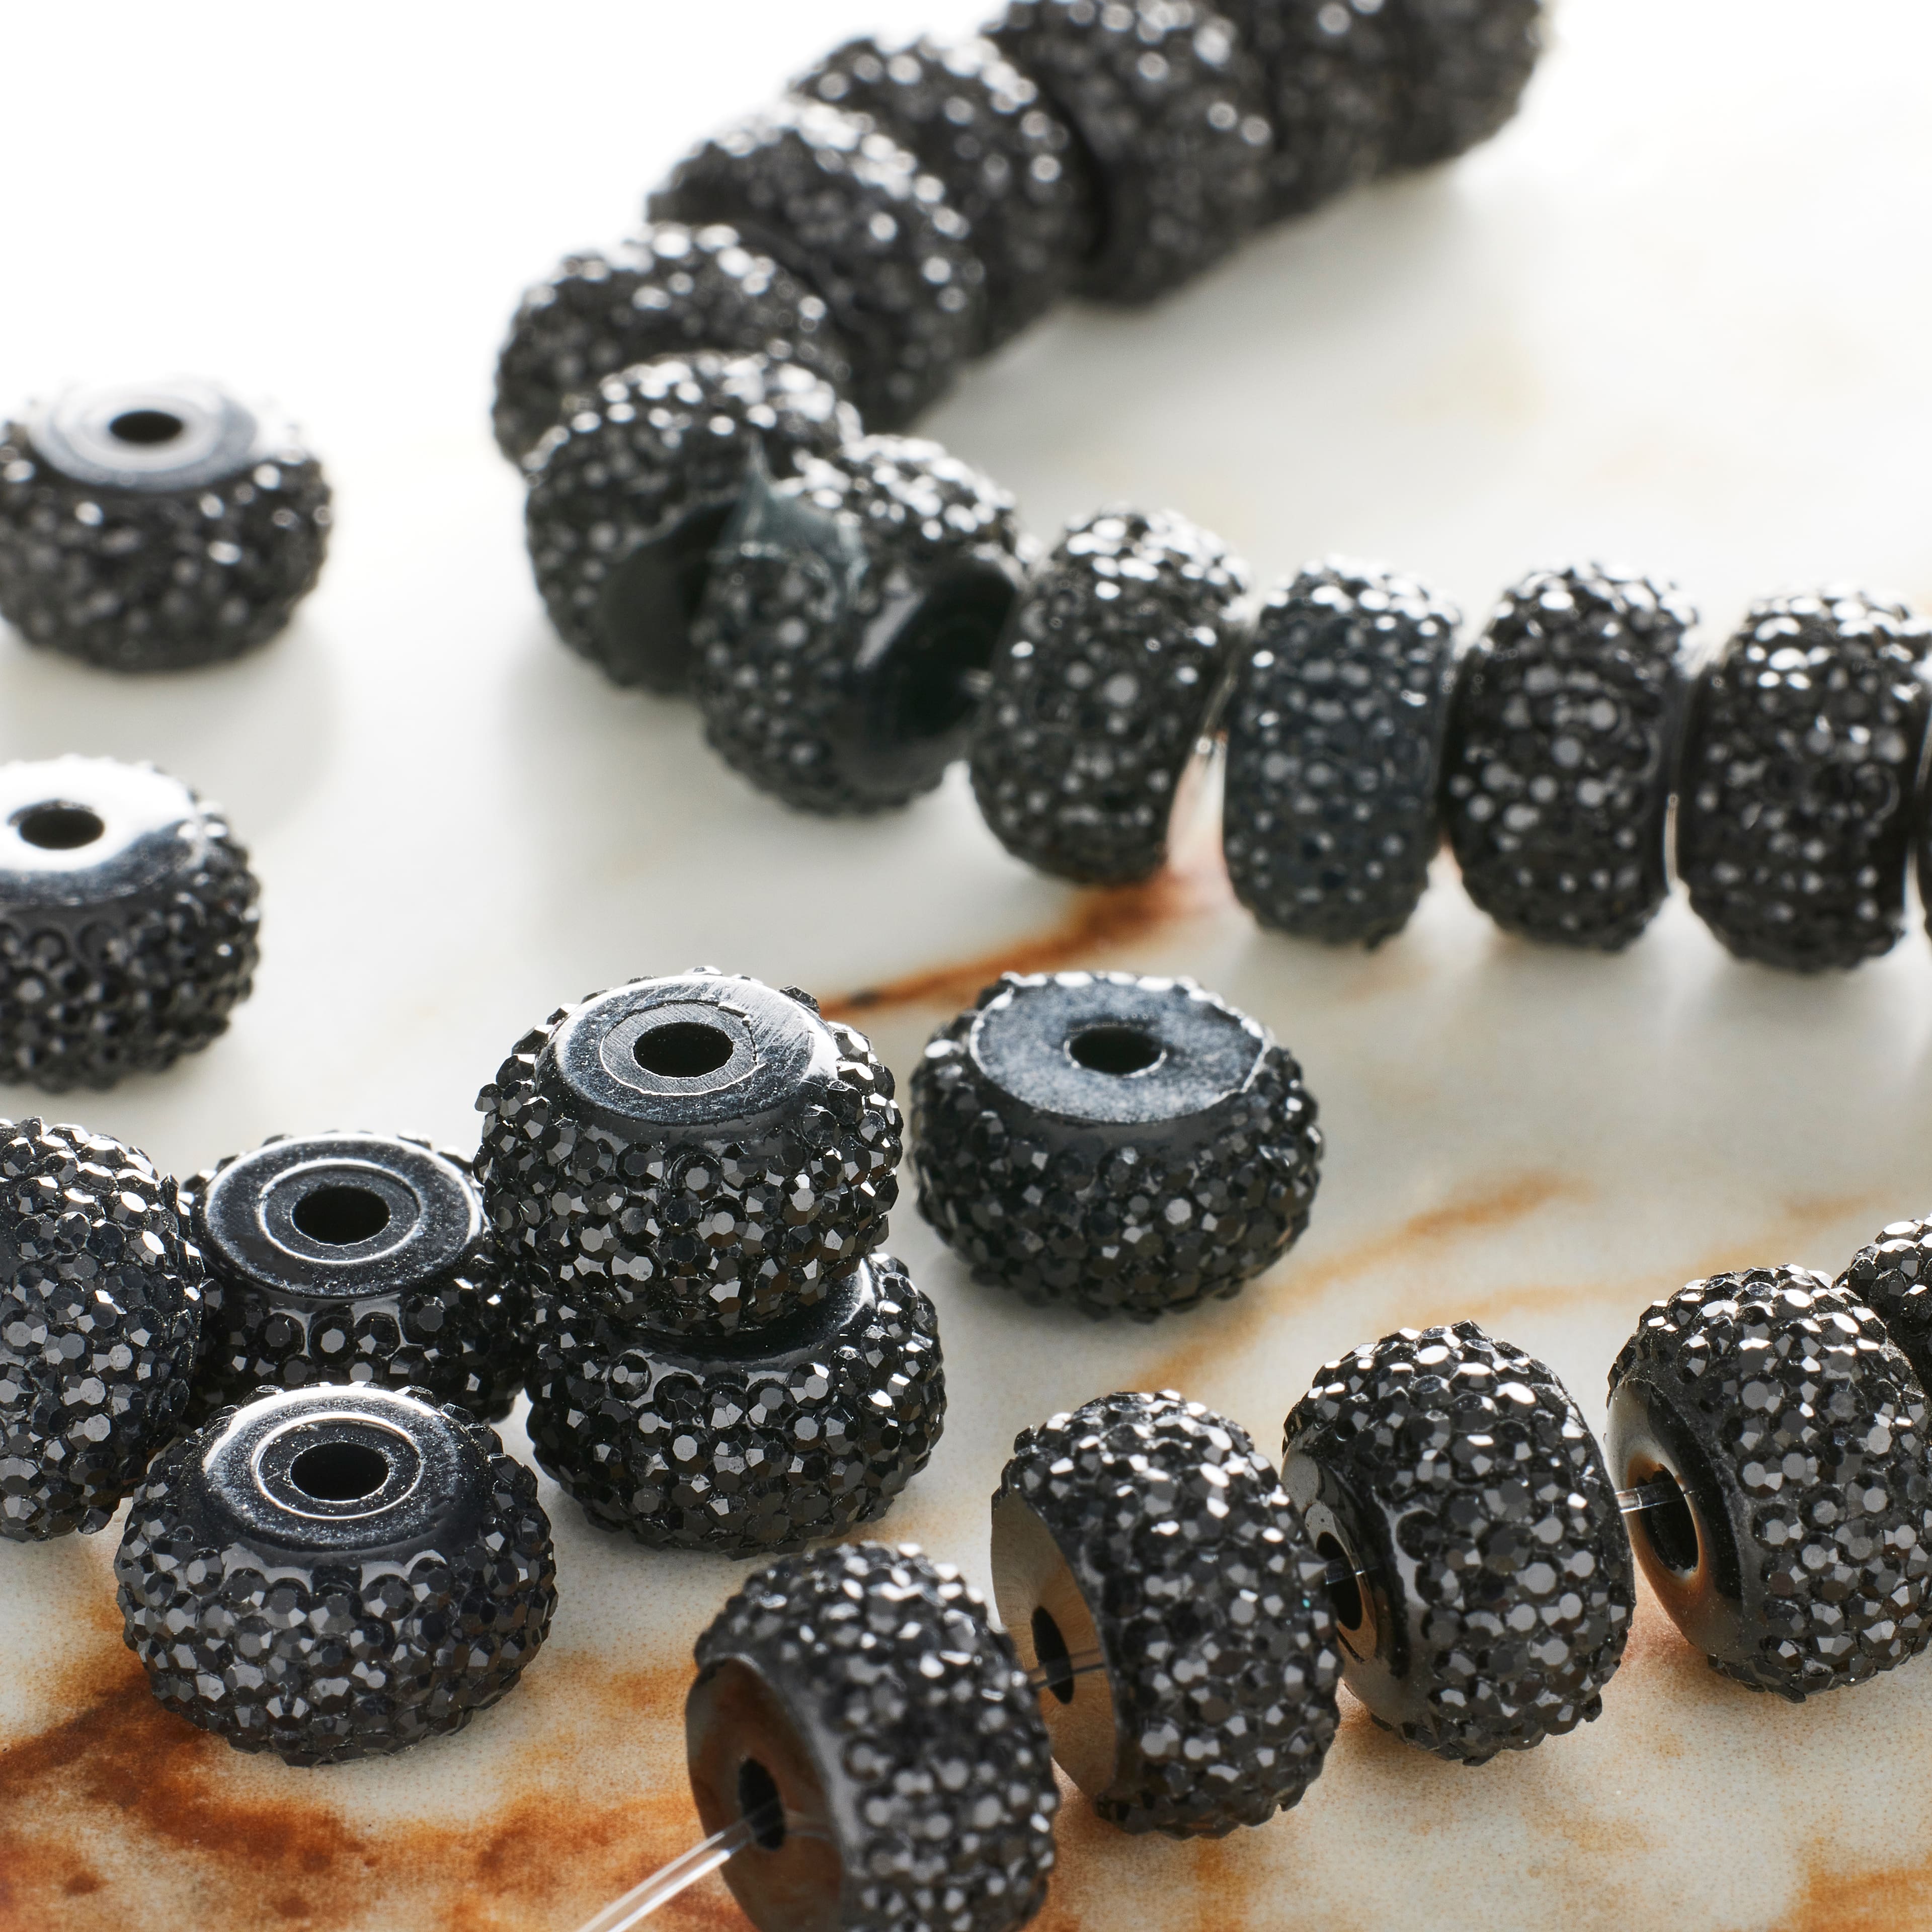 12 Packs: 30 ct. (360 total) Black Resin Rondelle Beads, 10mm by Bead Landing&#x2122;